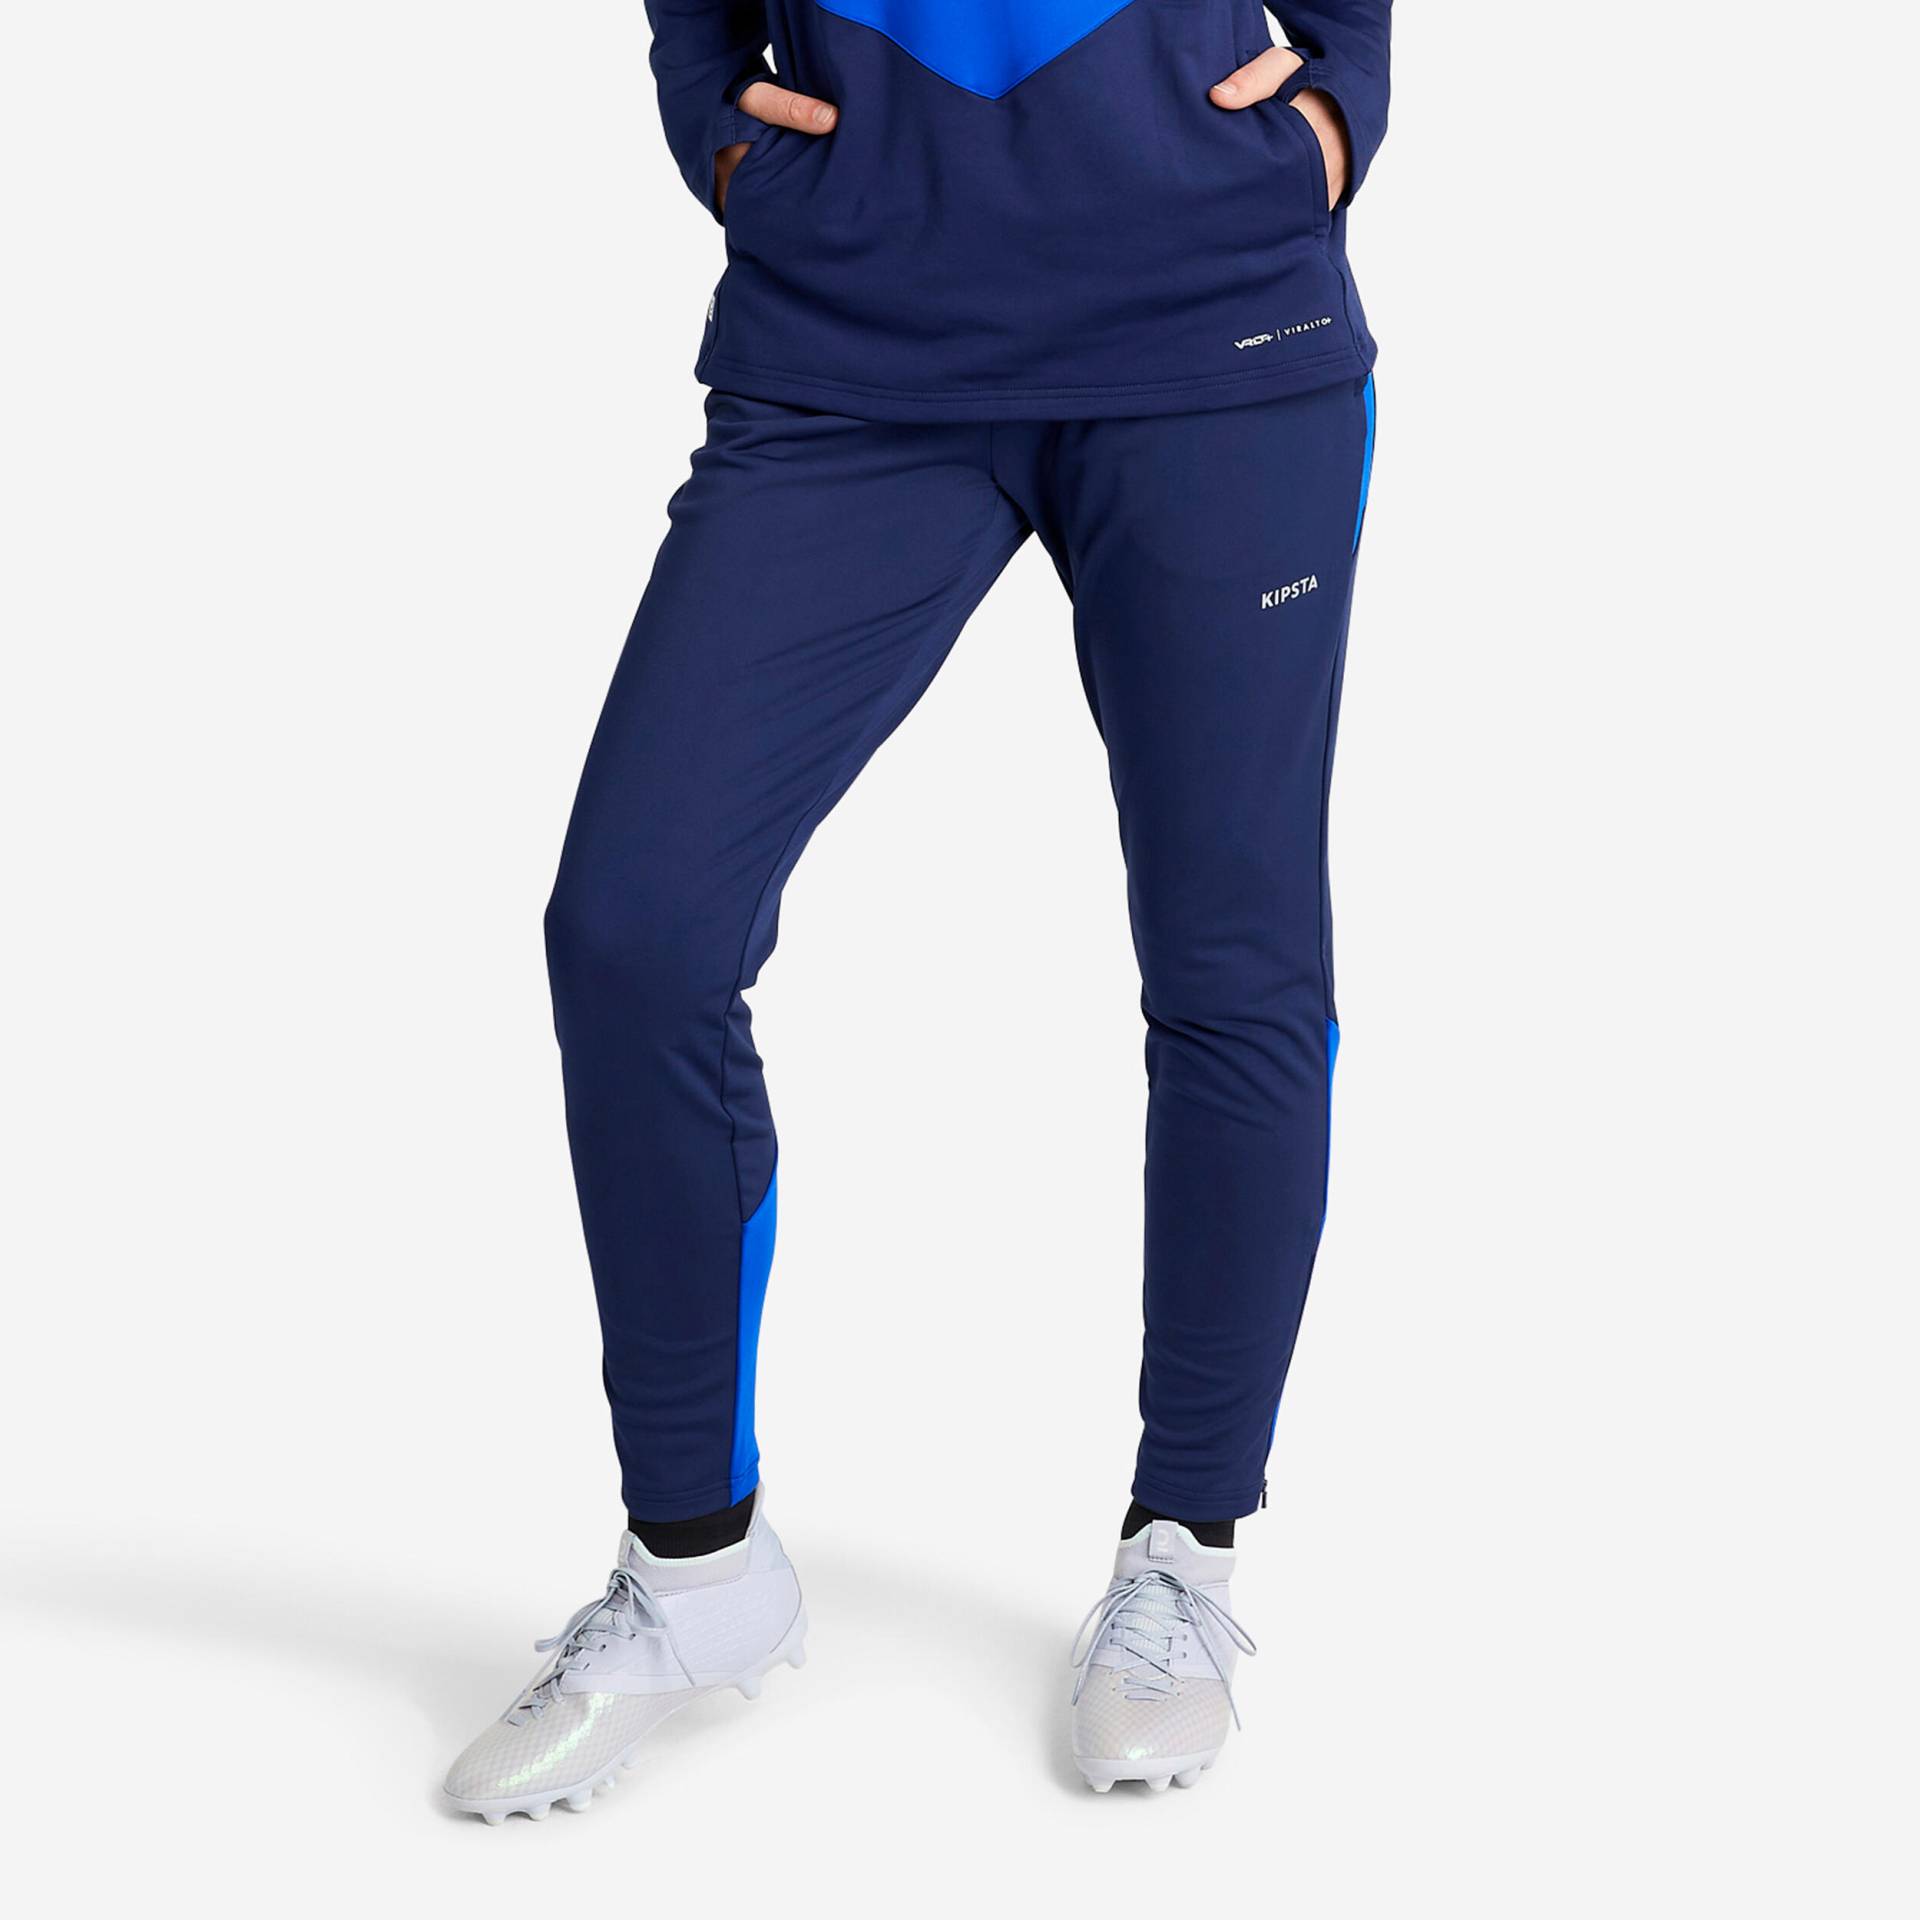 Damen Fussball Trainingshose - Viralto blau von KIPSTA